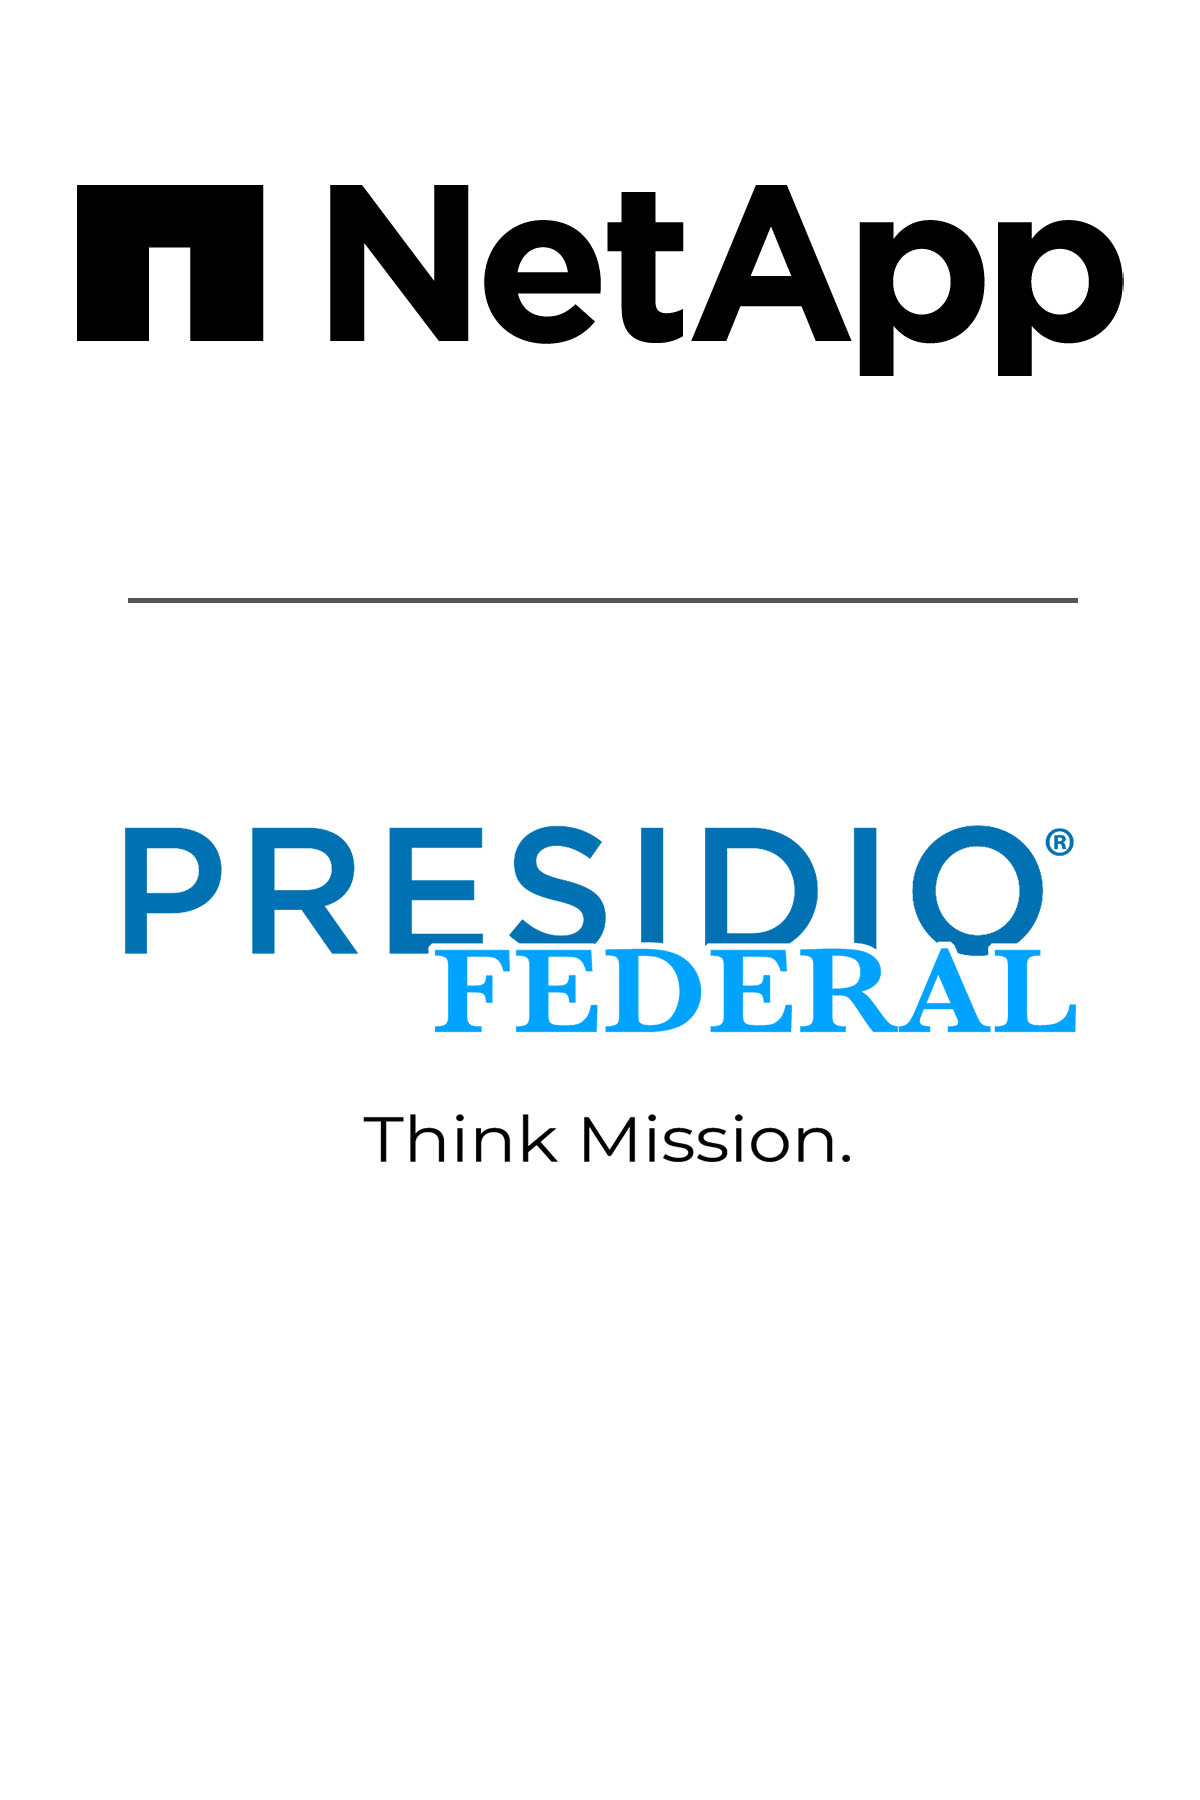 NetApp and Presidio Federal's logo